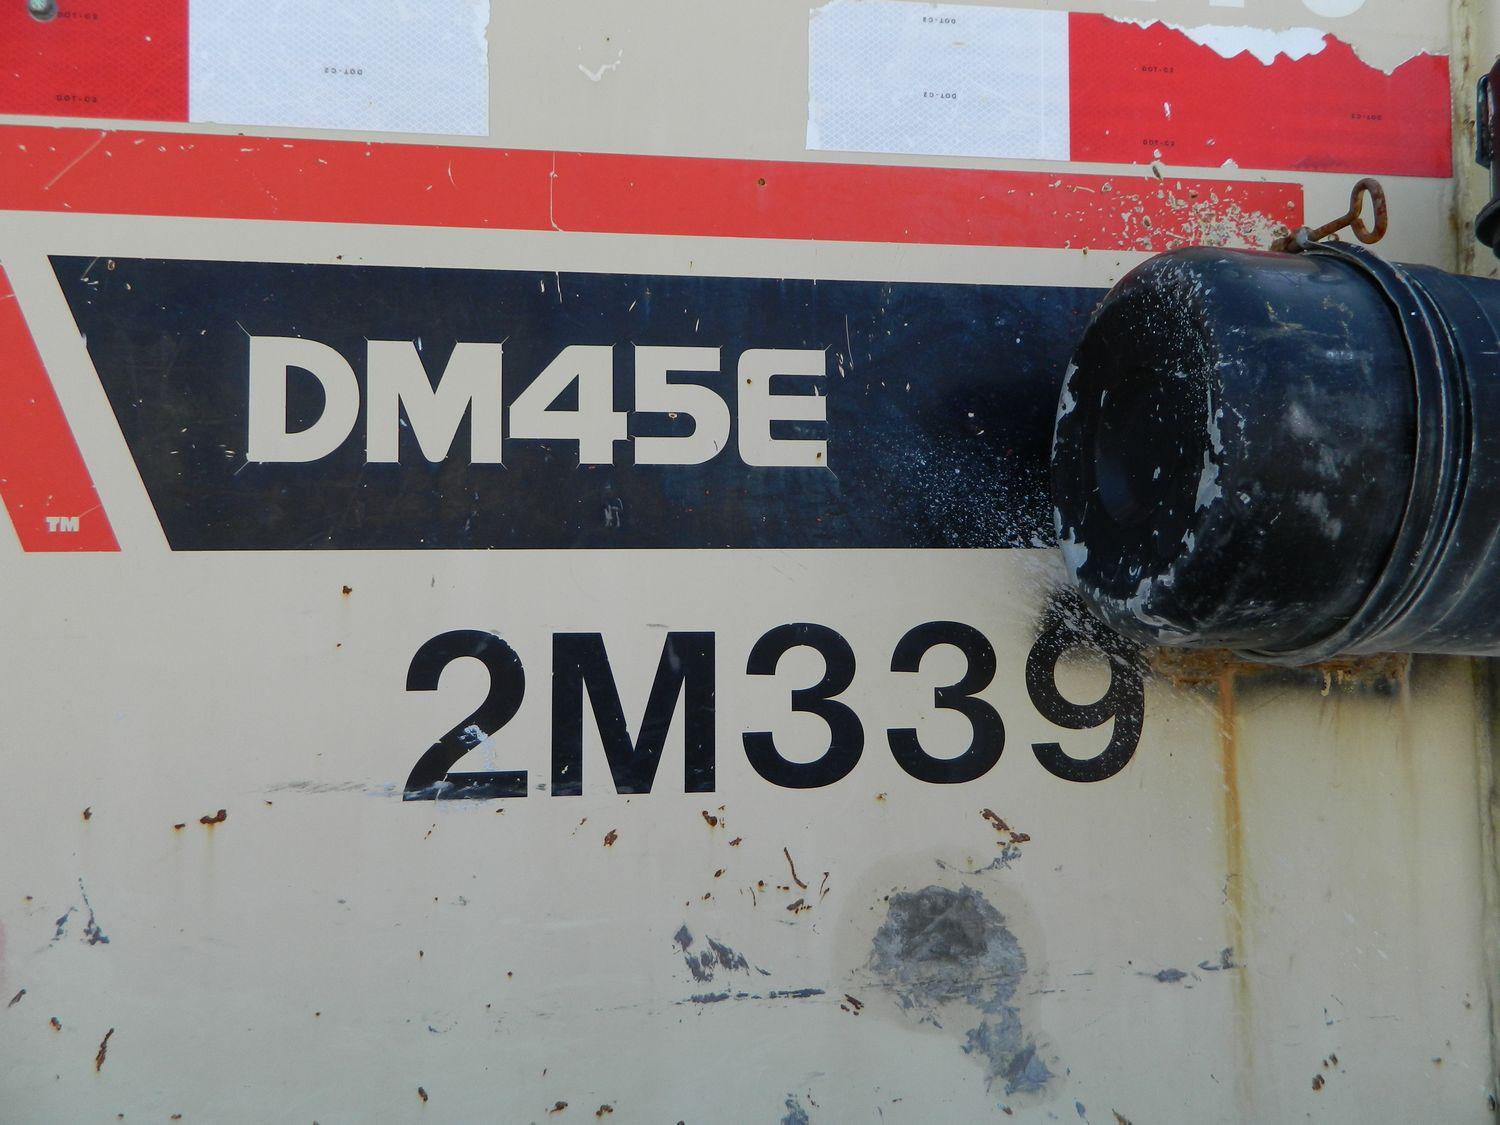 Ingersoll Rand DM 45E Blasthole Drill